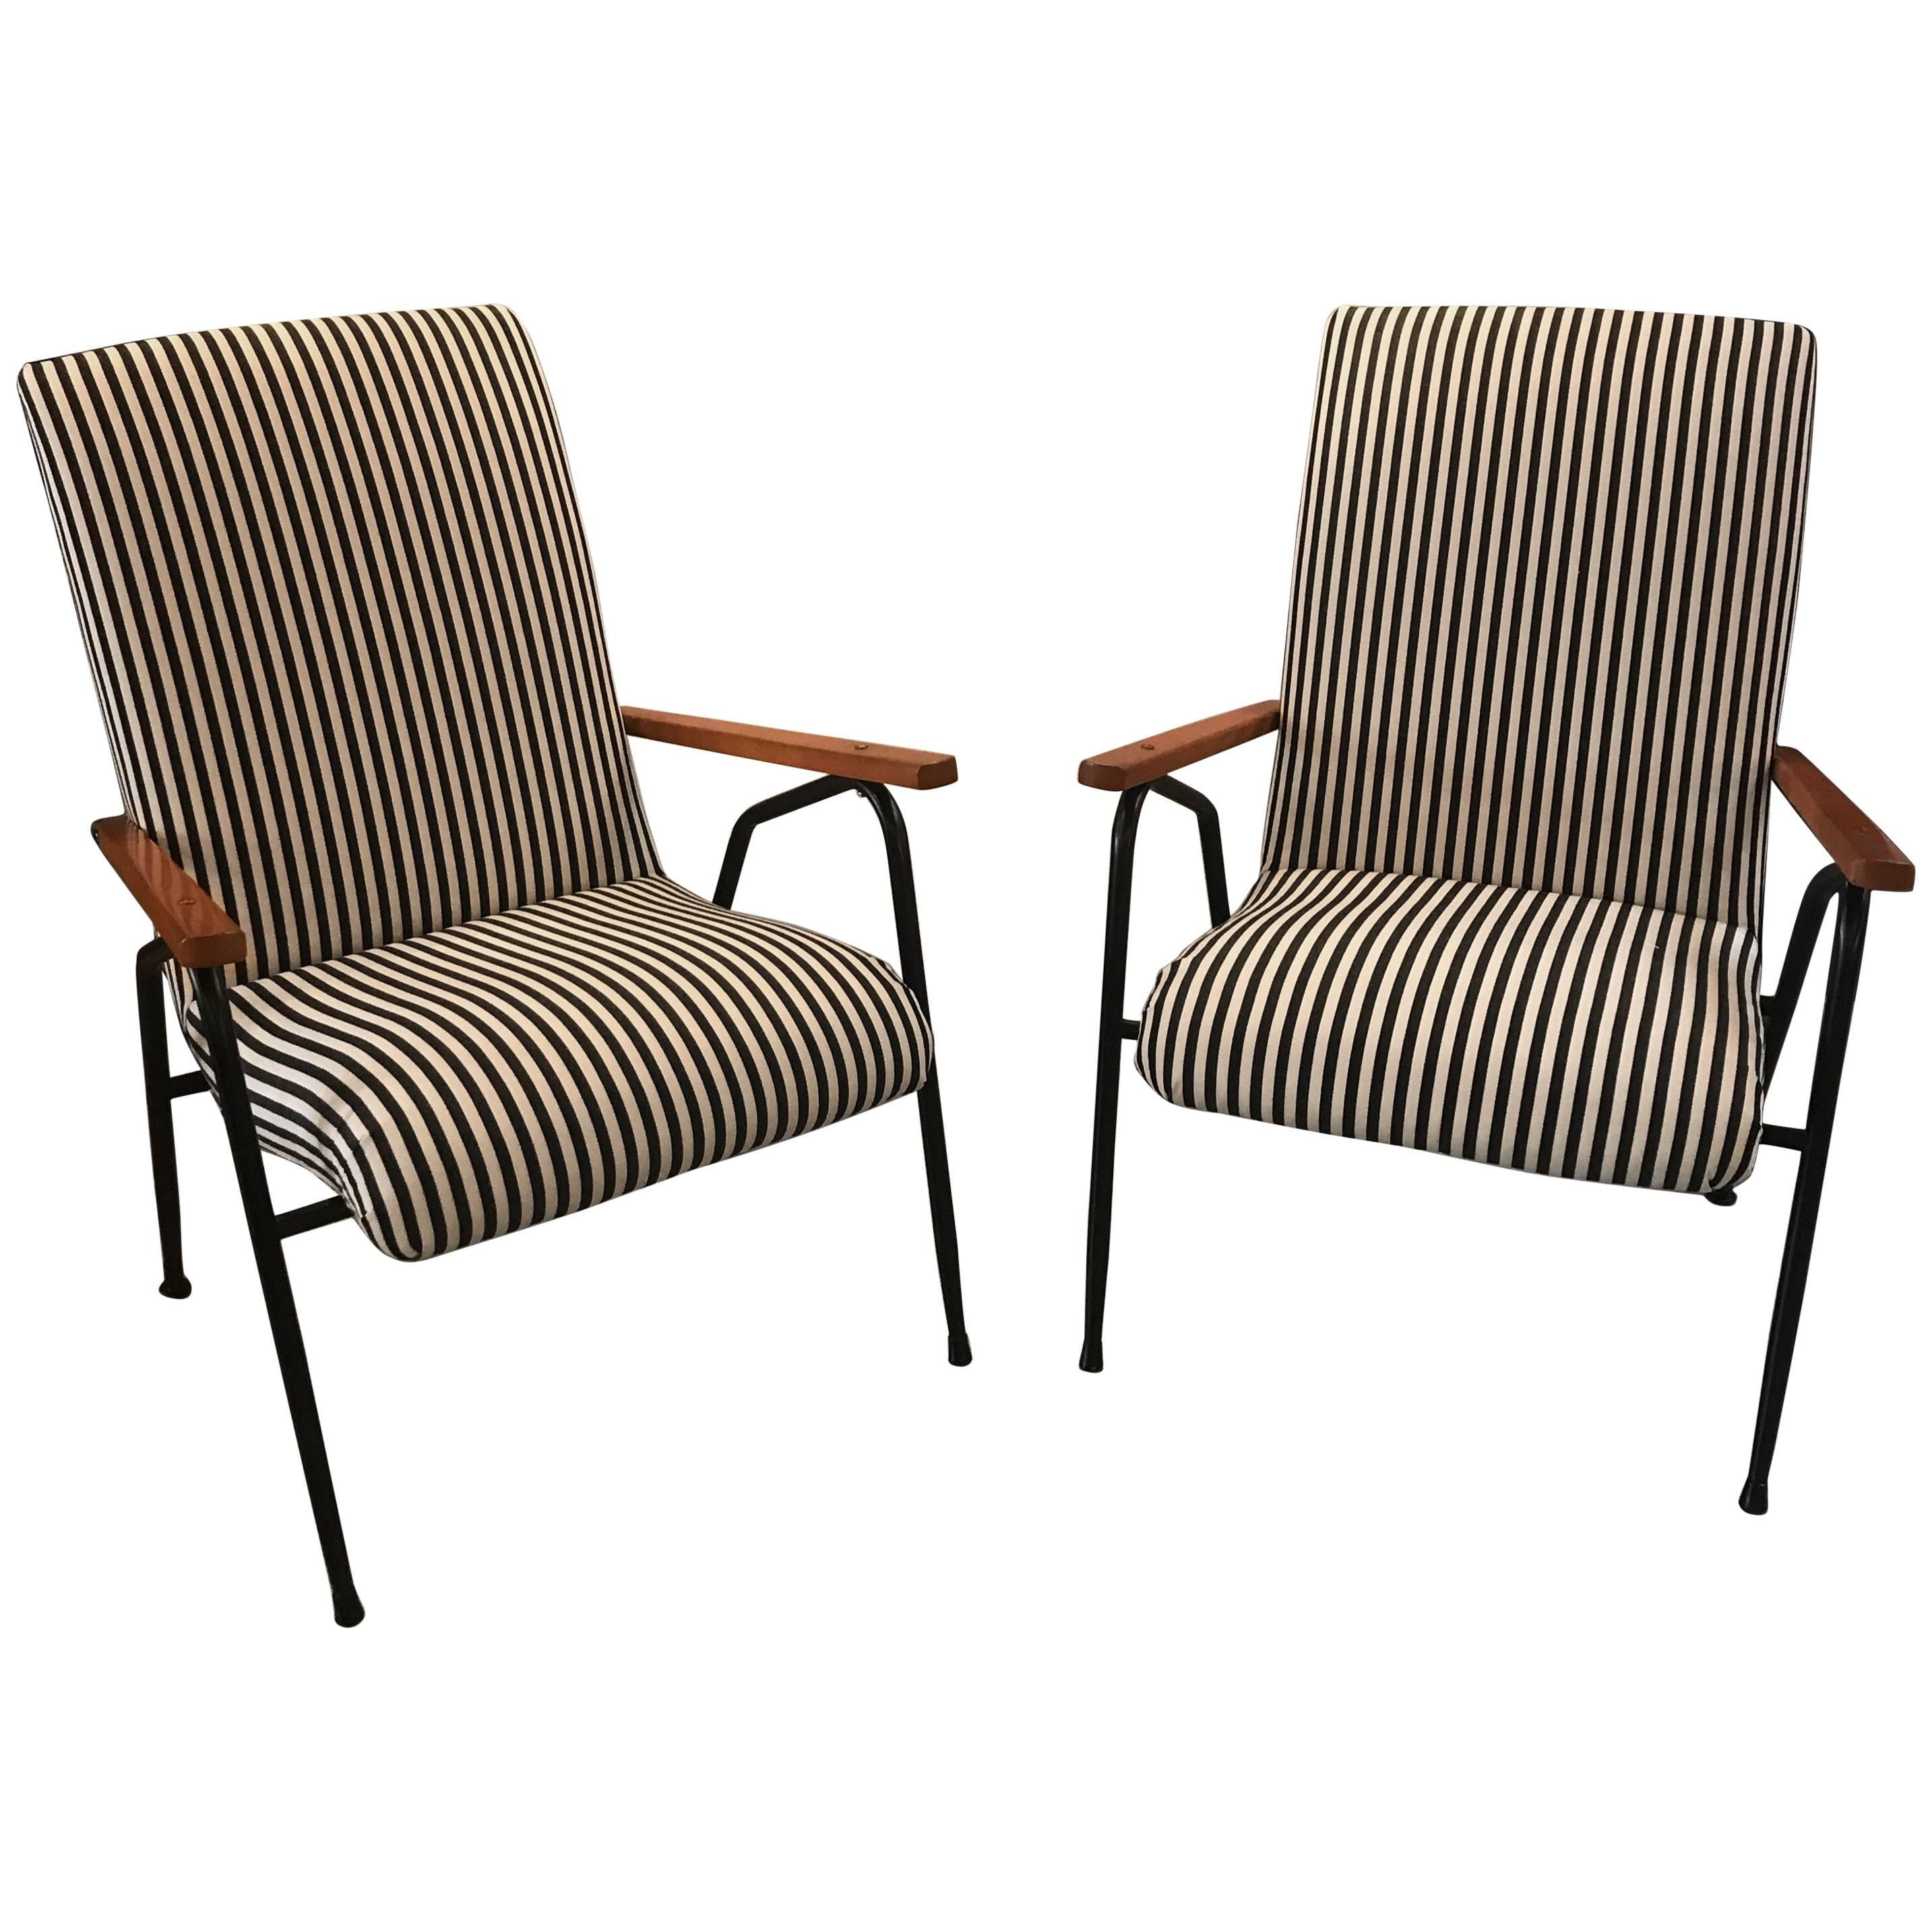 Pair of 1950s Italian Sunroom Lounge Chairs